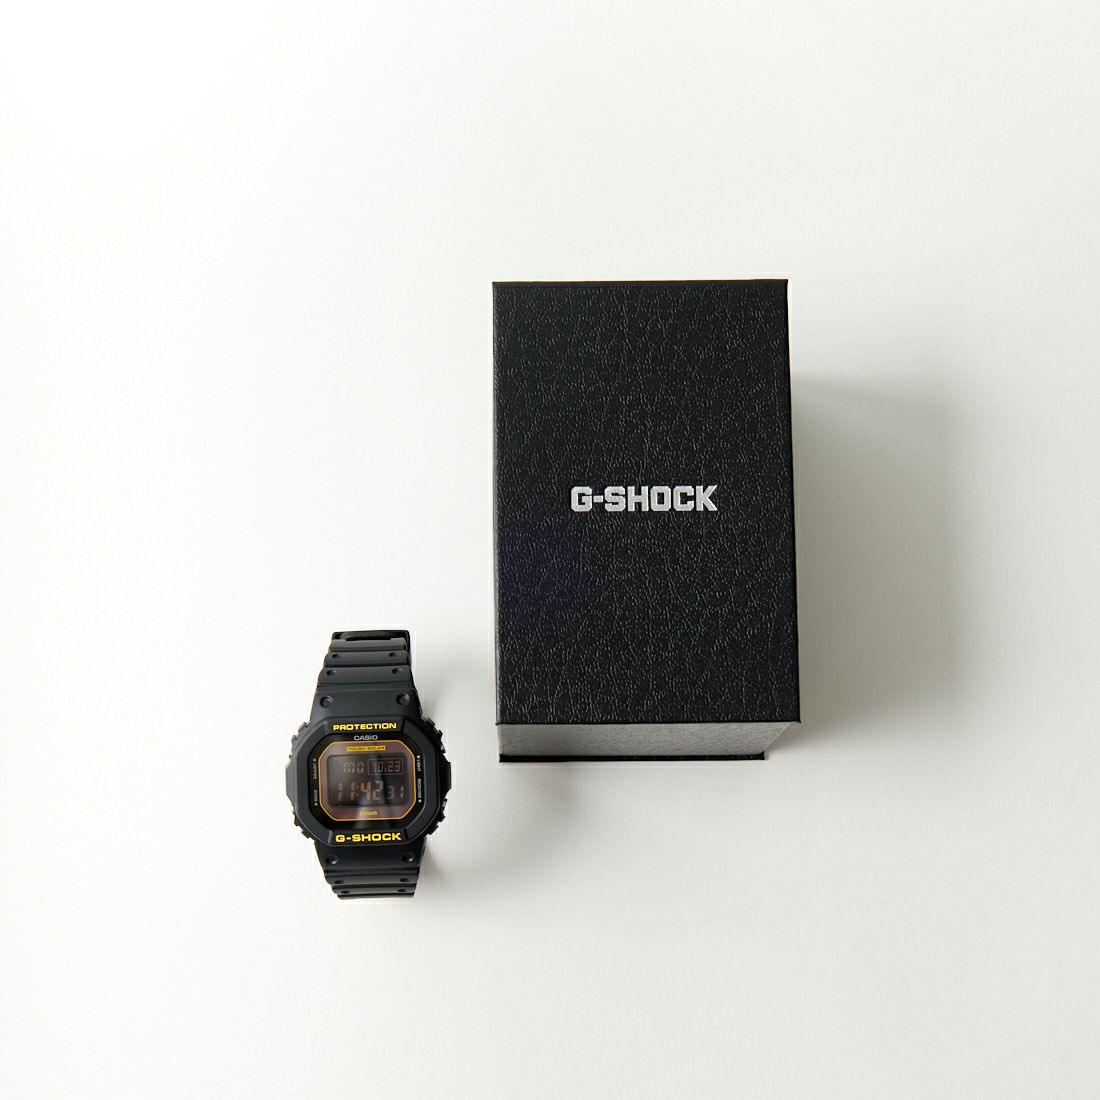 G-SHOCK [ジーショック] デジタルウォッチ [GW-B5600CY-1JF] BLACK